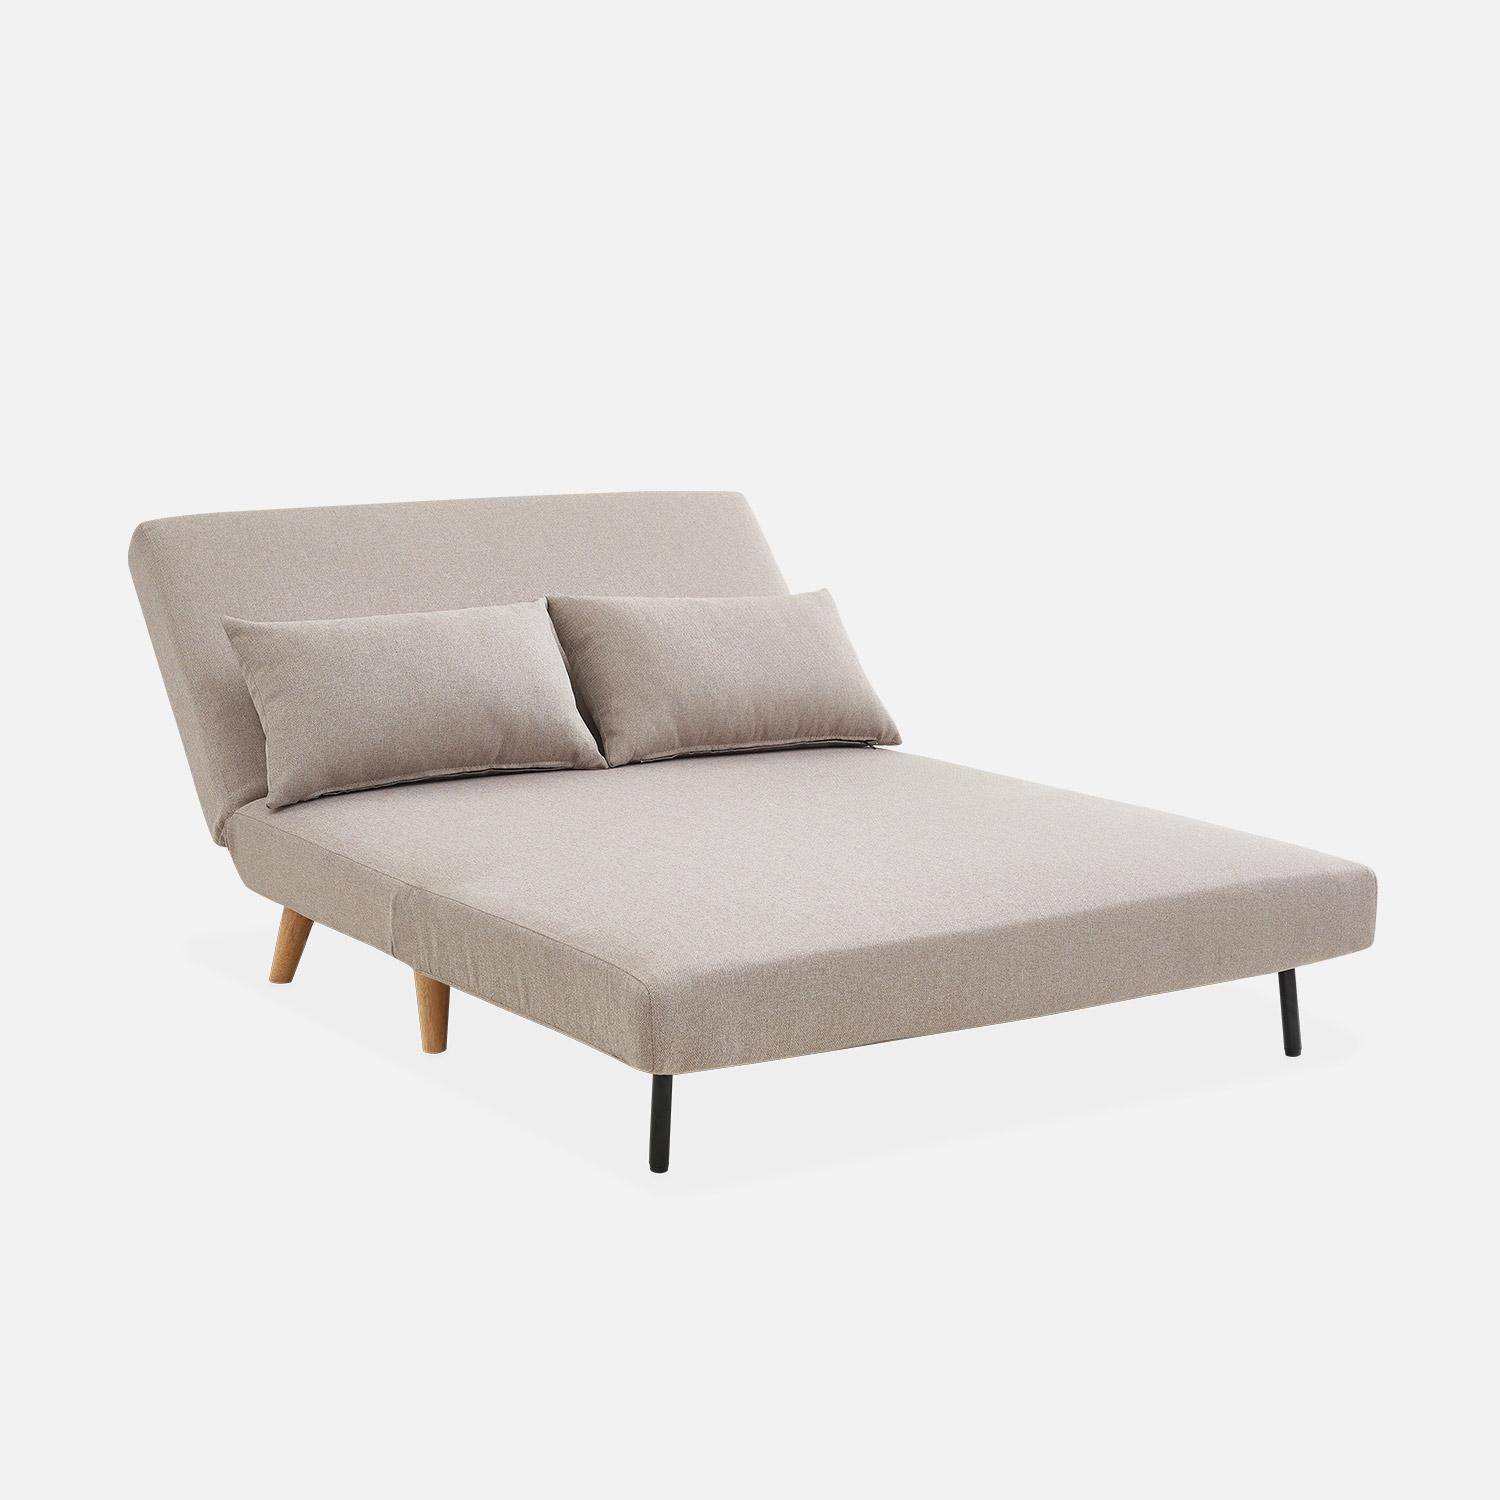 Sleeper, 2-Seater Convertible Sofa, L120xW 81xH82cm, beige Photo6